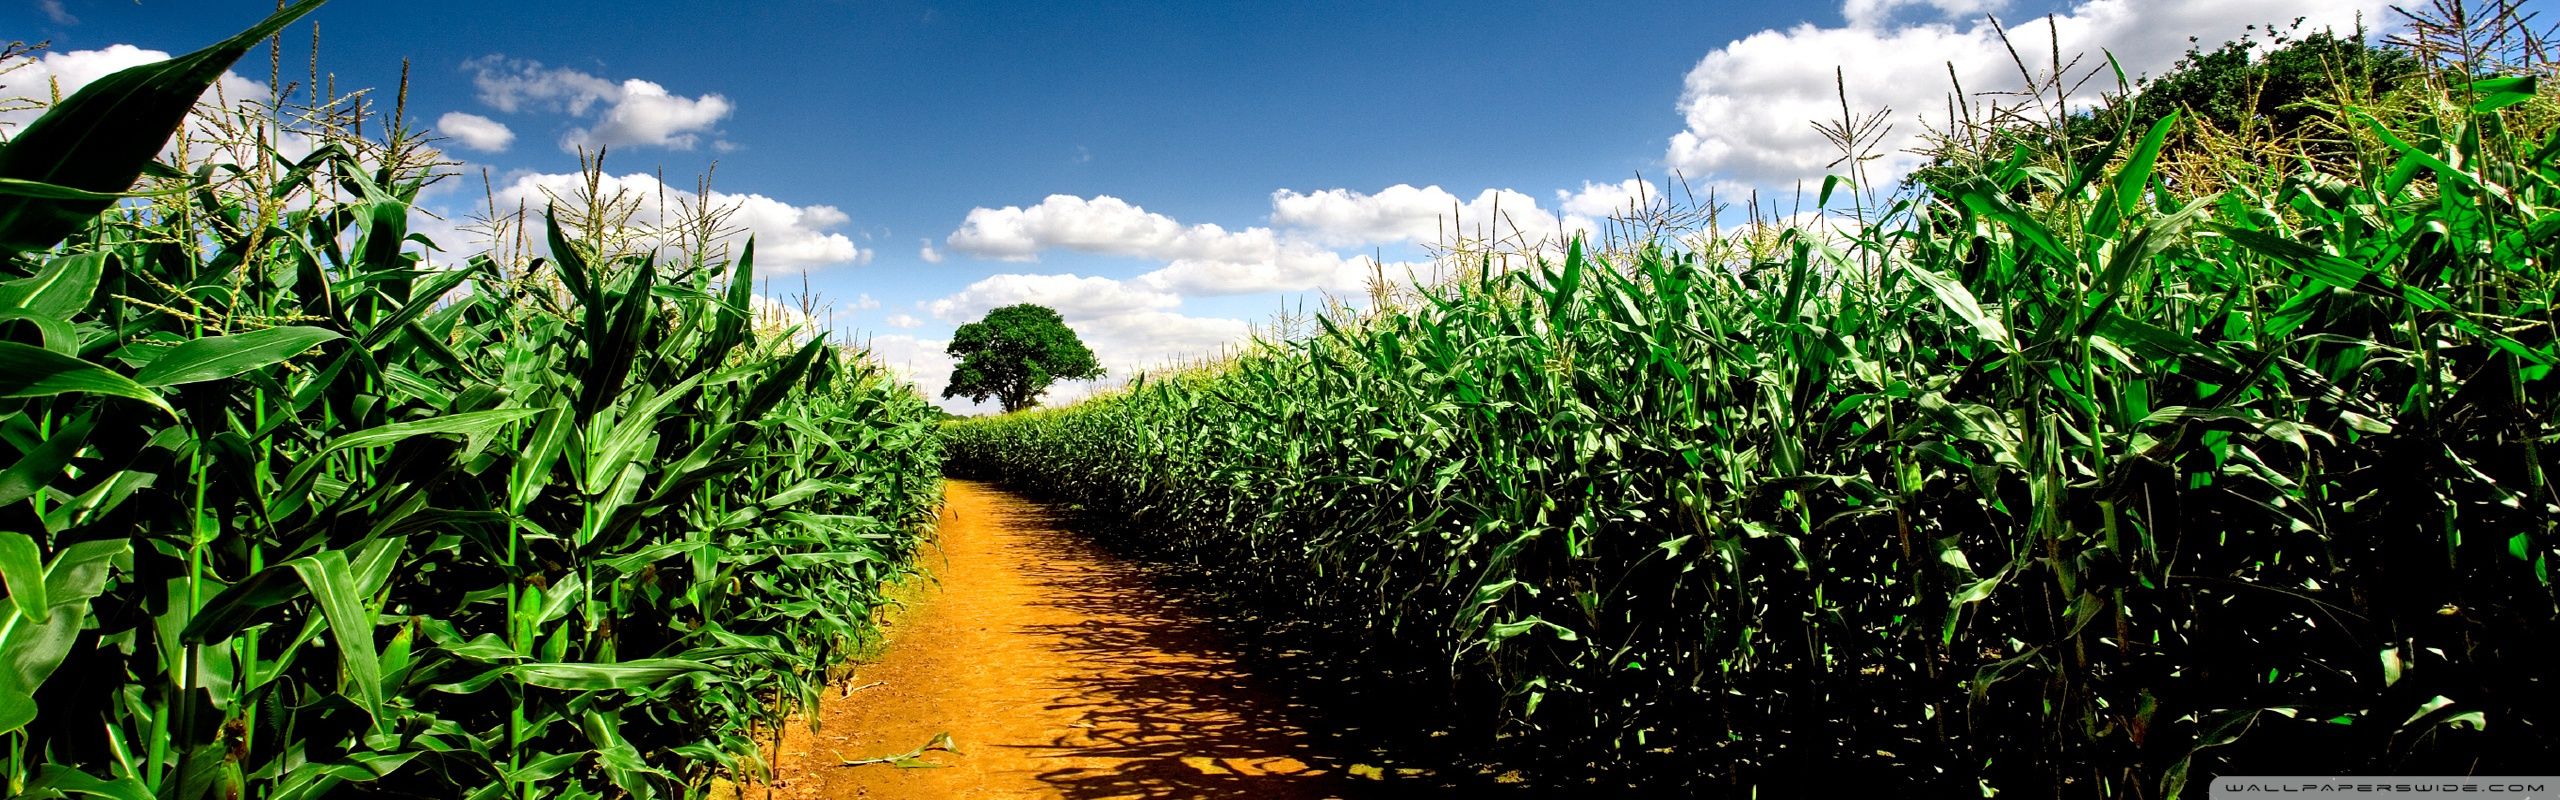  Corn Field Background HD Download  CBEditz